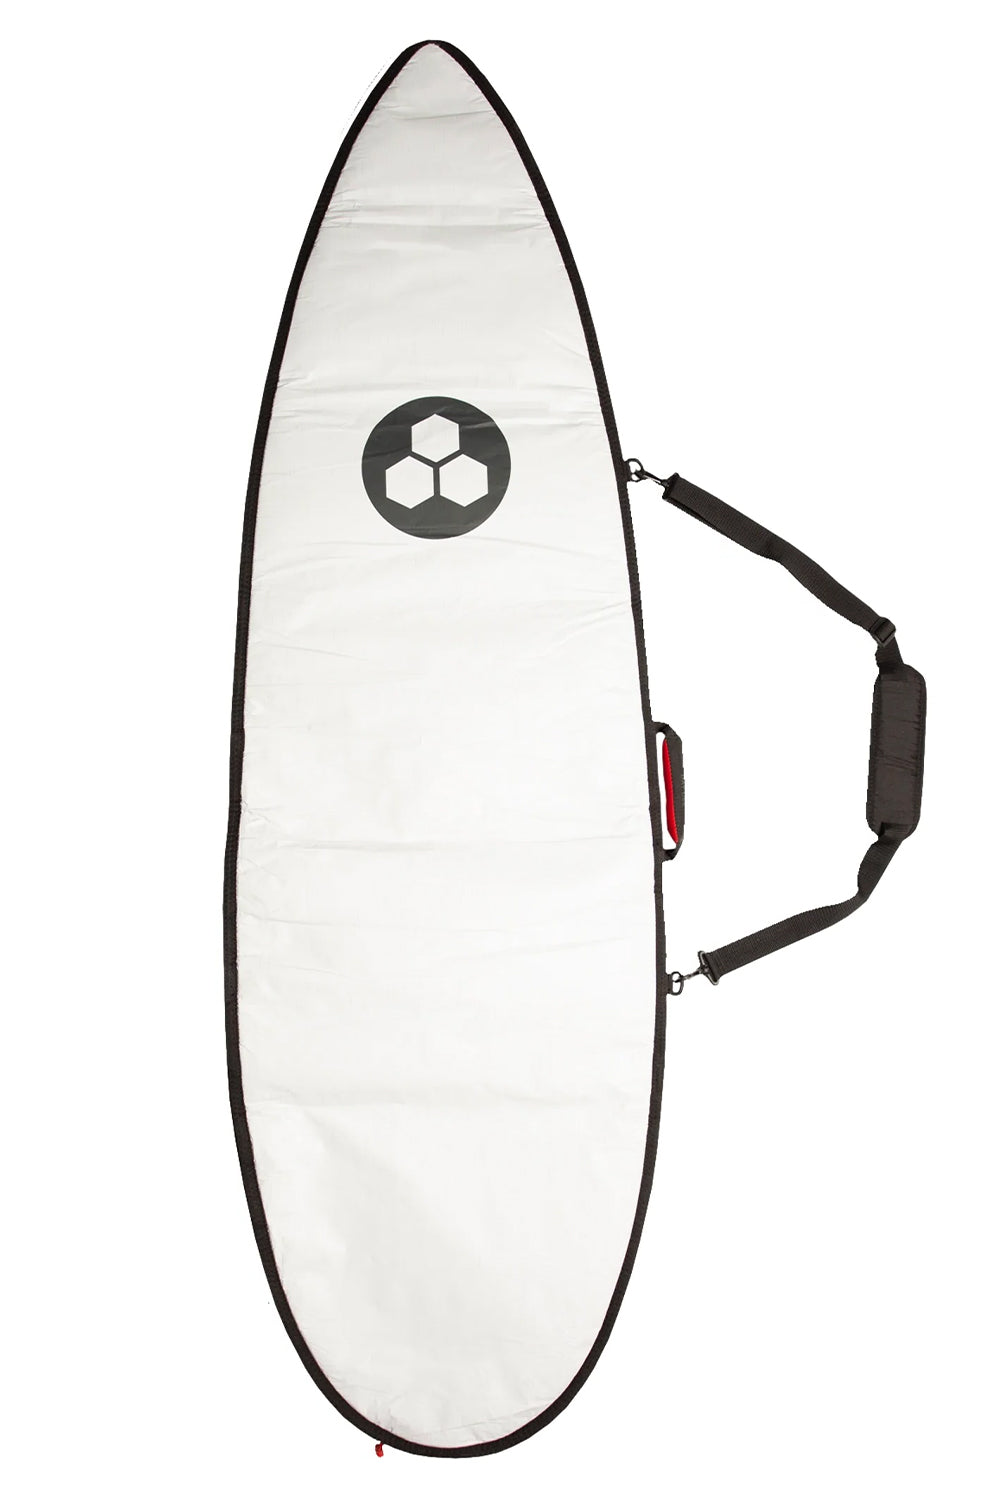 Channel Islands Everyday Shortboard Bag